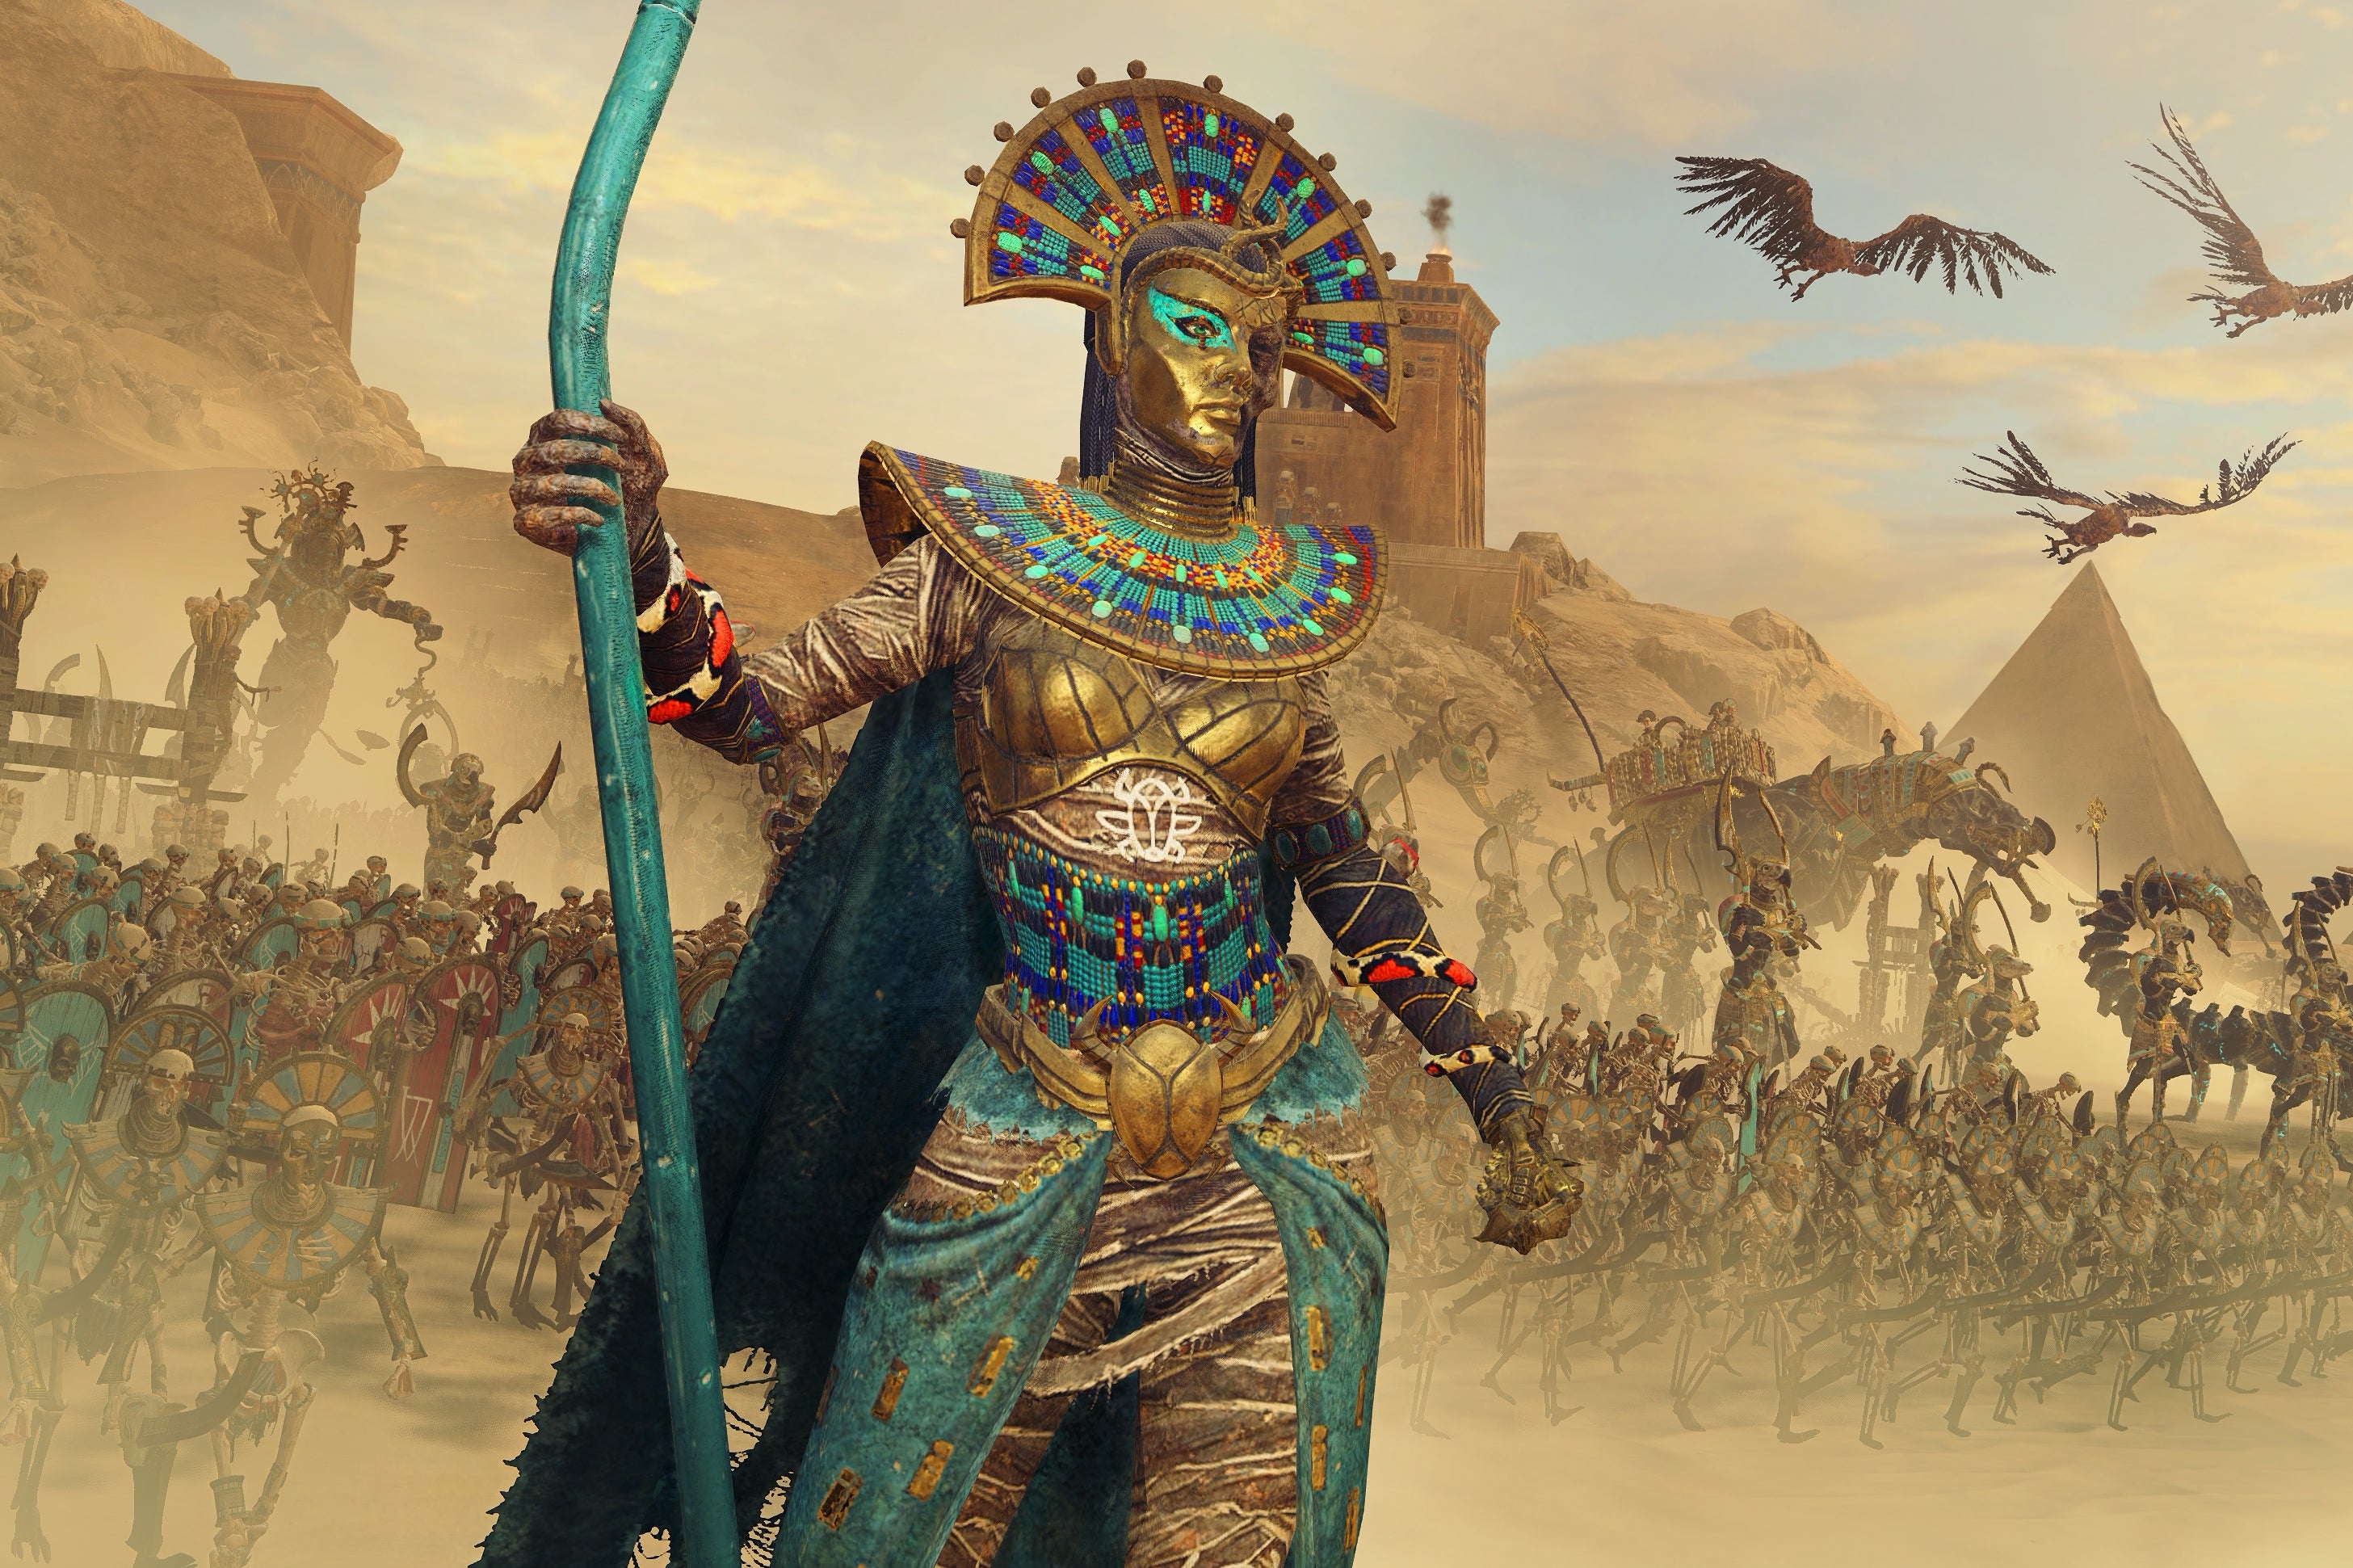 Afbeeldingen van Total War: Warhammer 2 - Rise of the Tomb Kings DLC onthuld